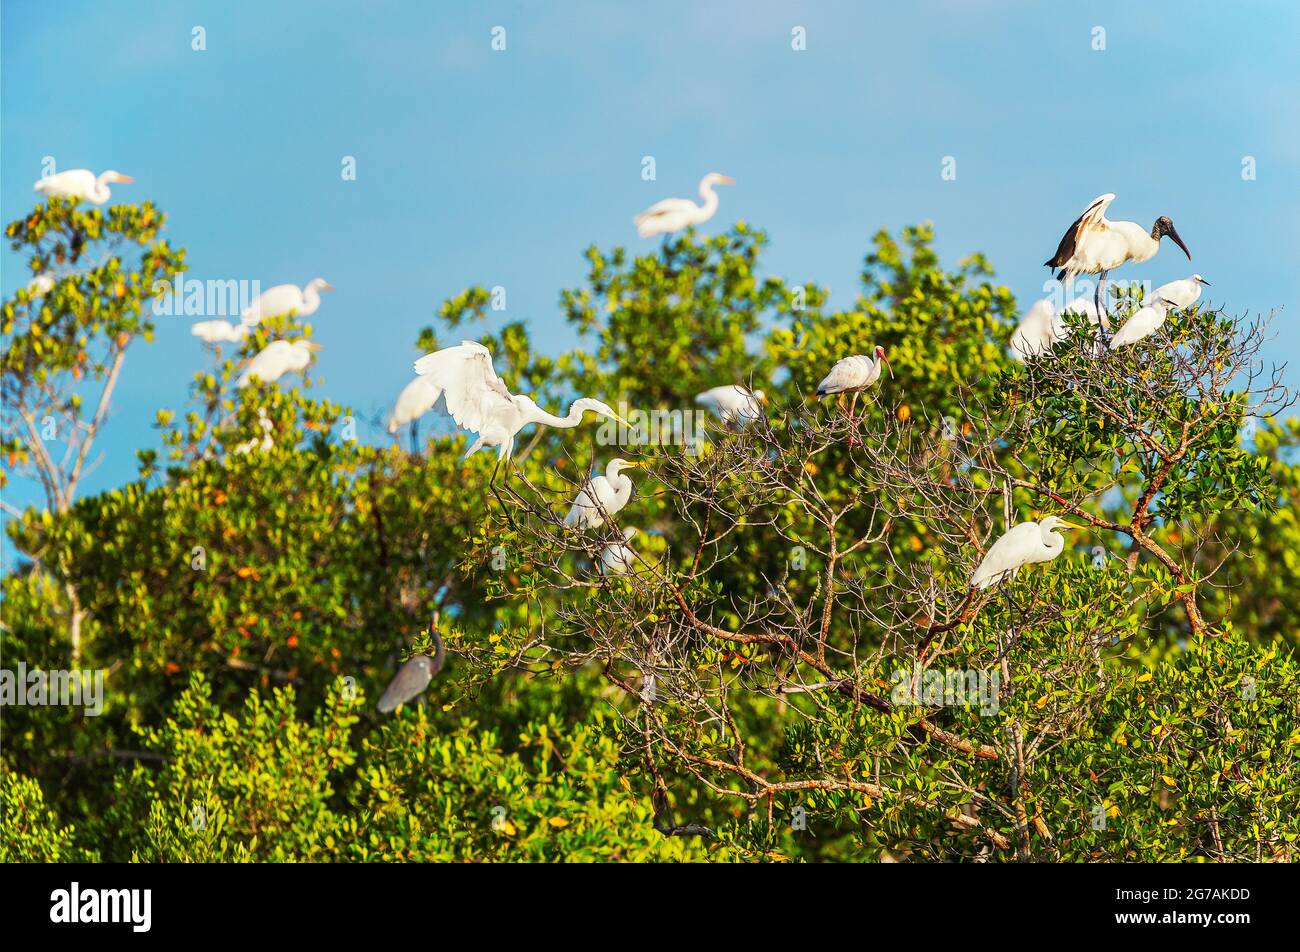 Group of Great white egrets (Ardea alba) and Wood Stork (Mycteria Americana) perching on tree, Sanibel Island, J.N. Ding Darling National Wildlife Refuge, Florida, USA Stock Photo